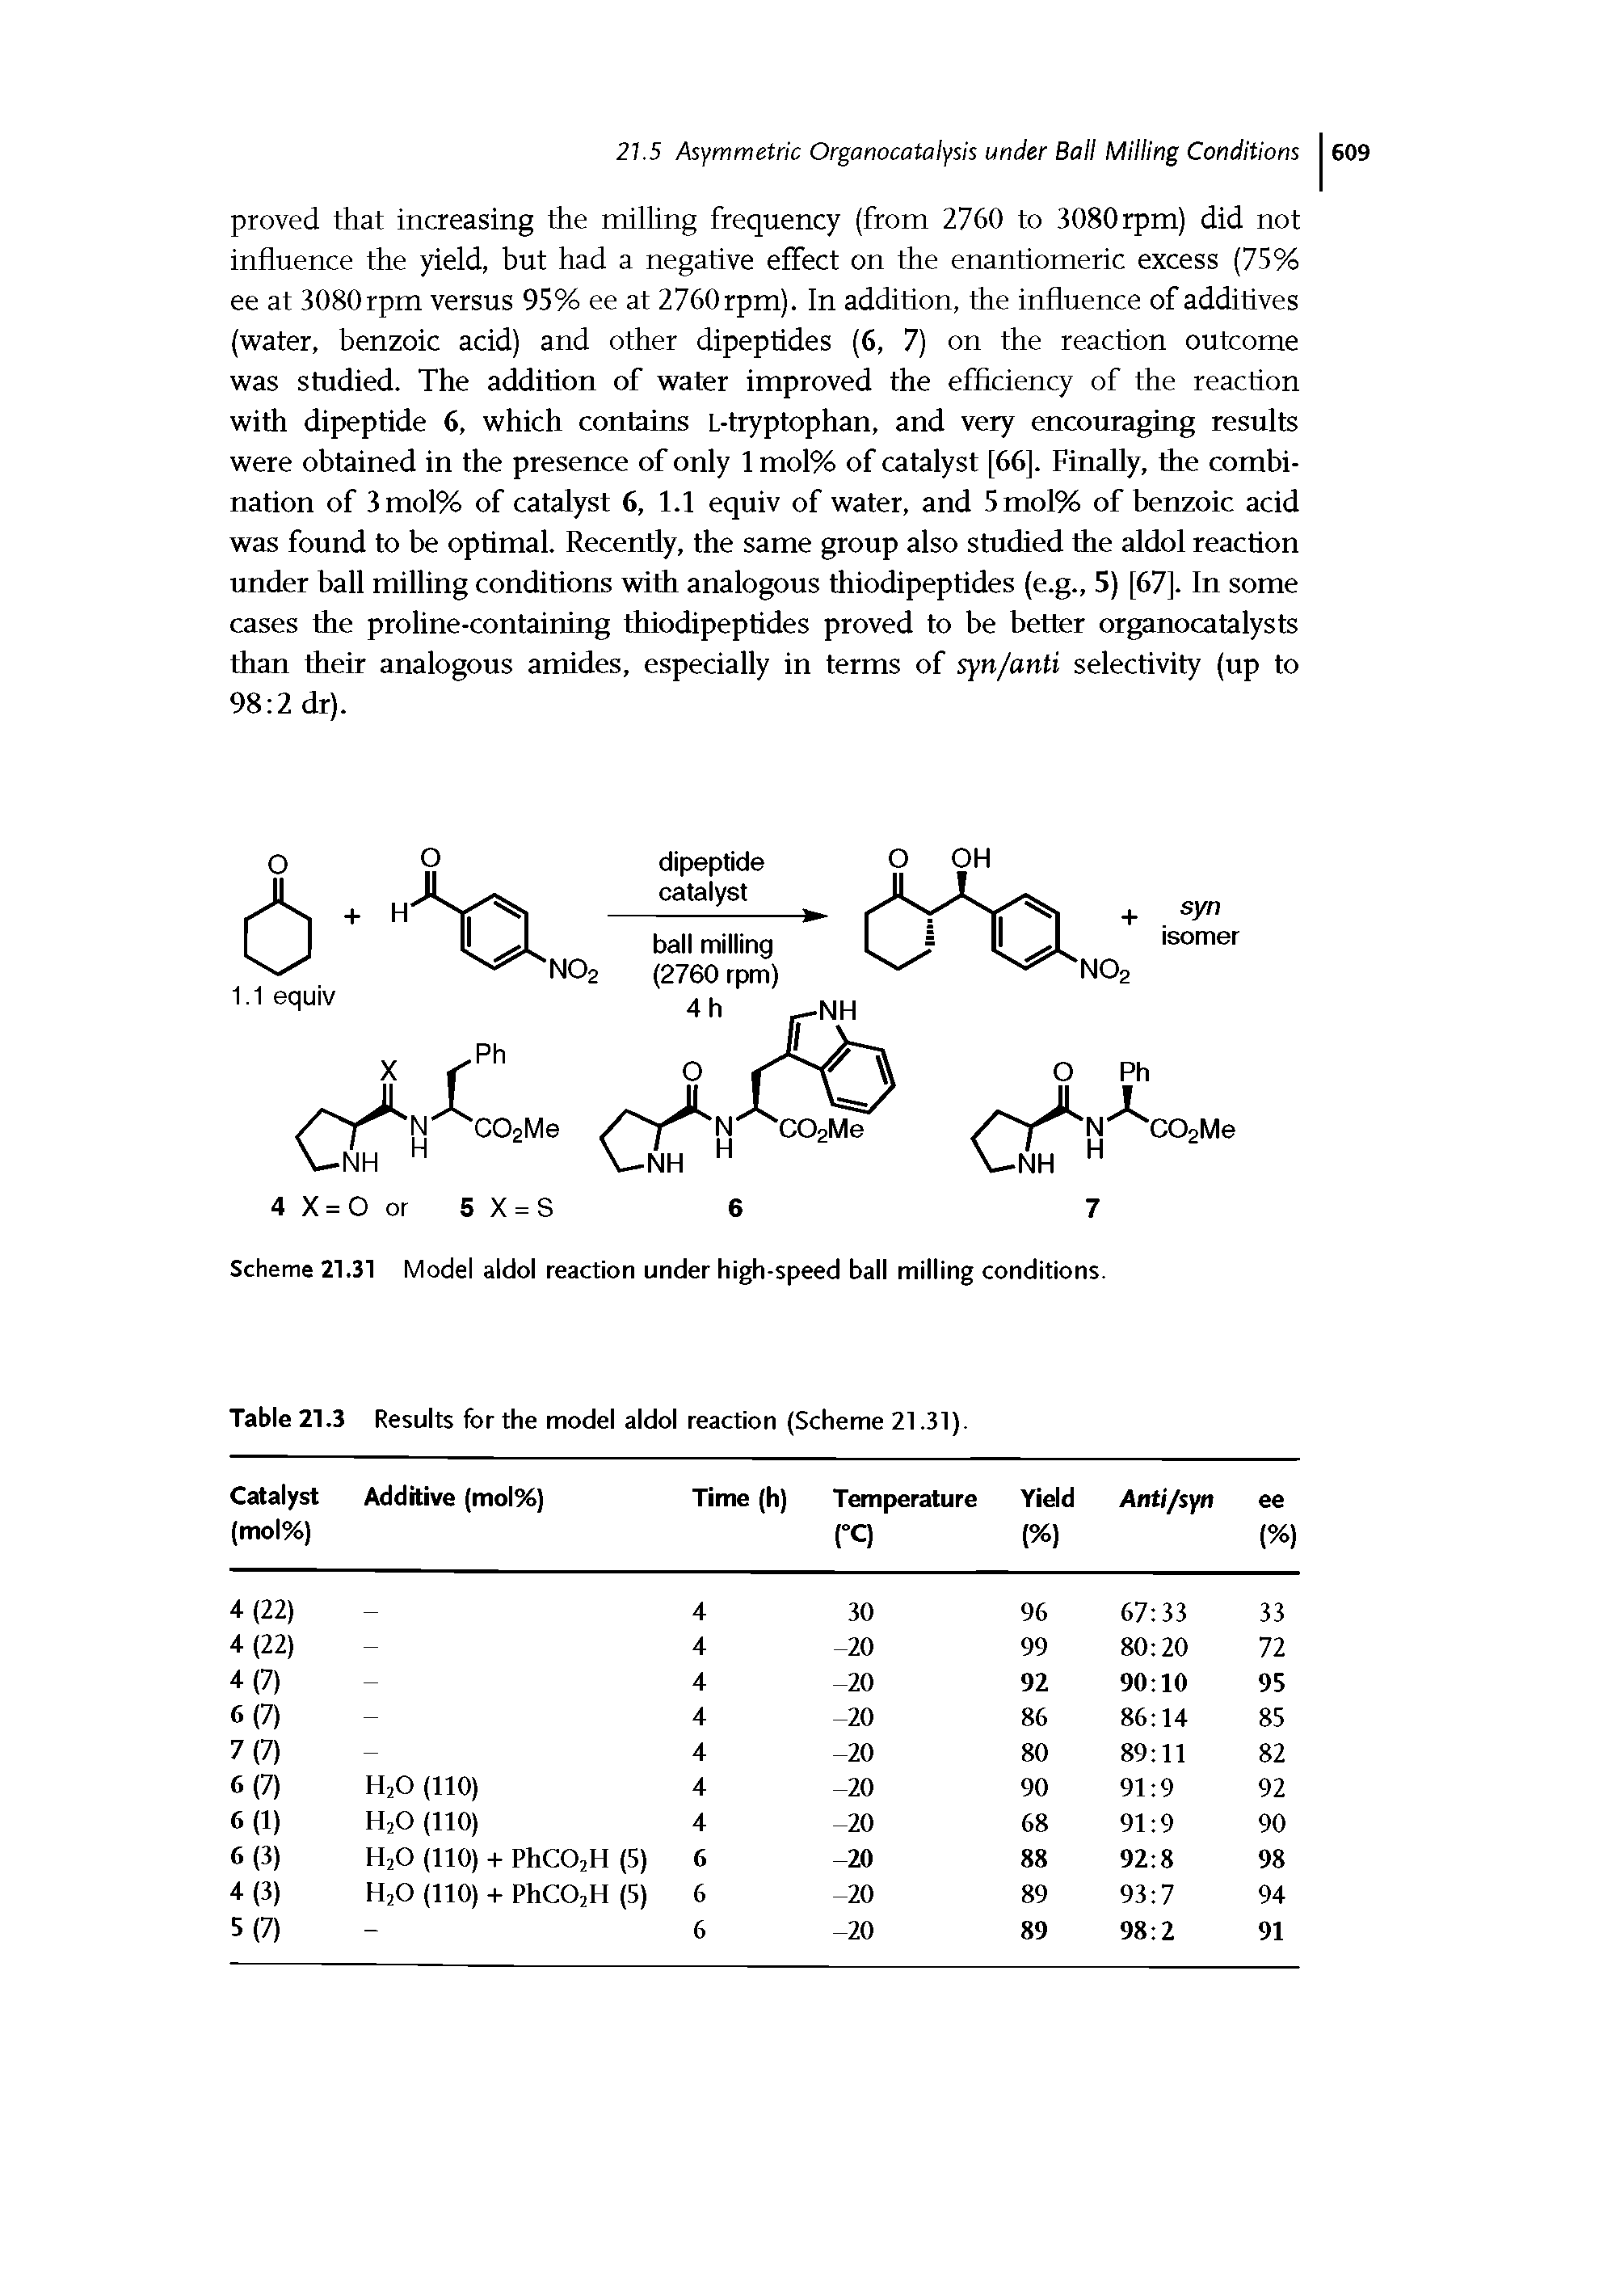 Scheme 21.31 Model aldol reaction under high-speed ball milling conditions.